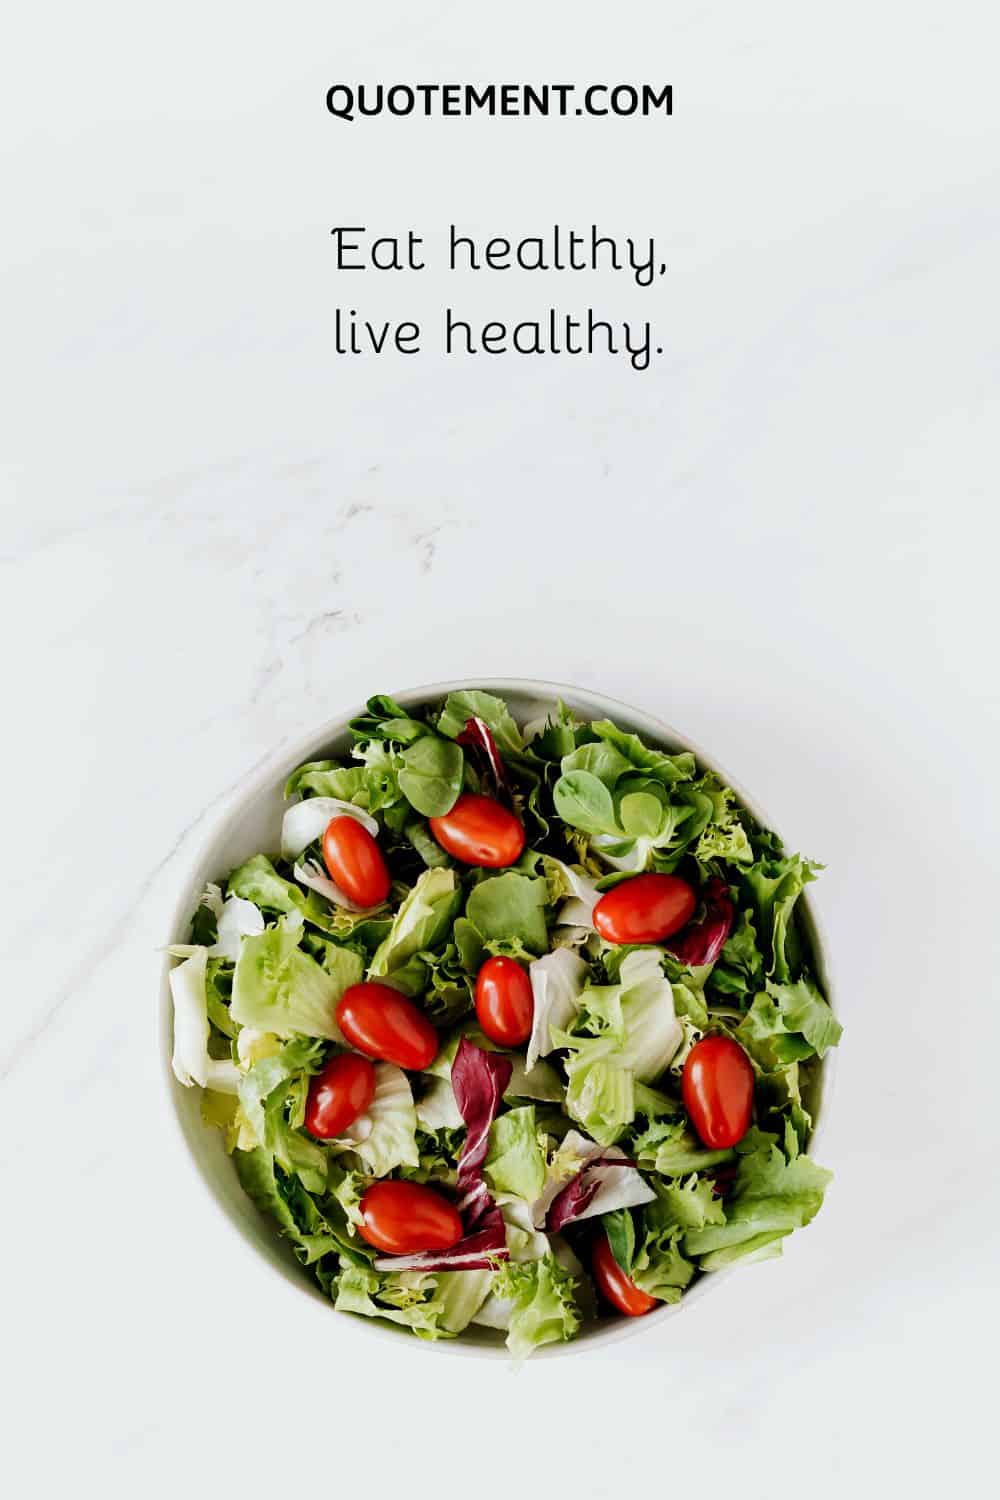 Eat healthy, live healthy